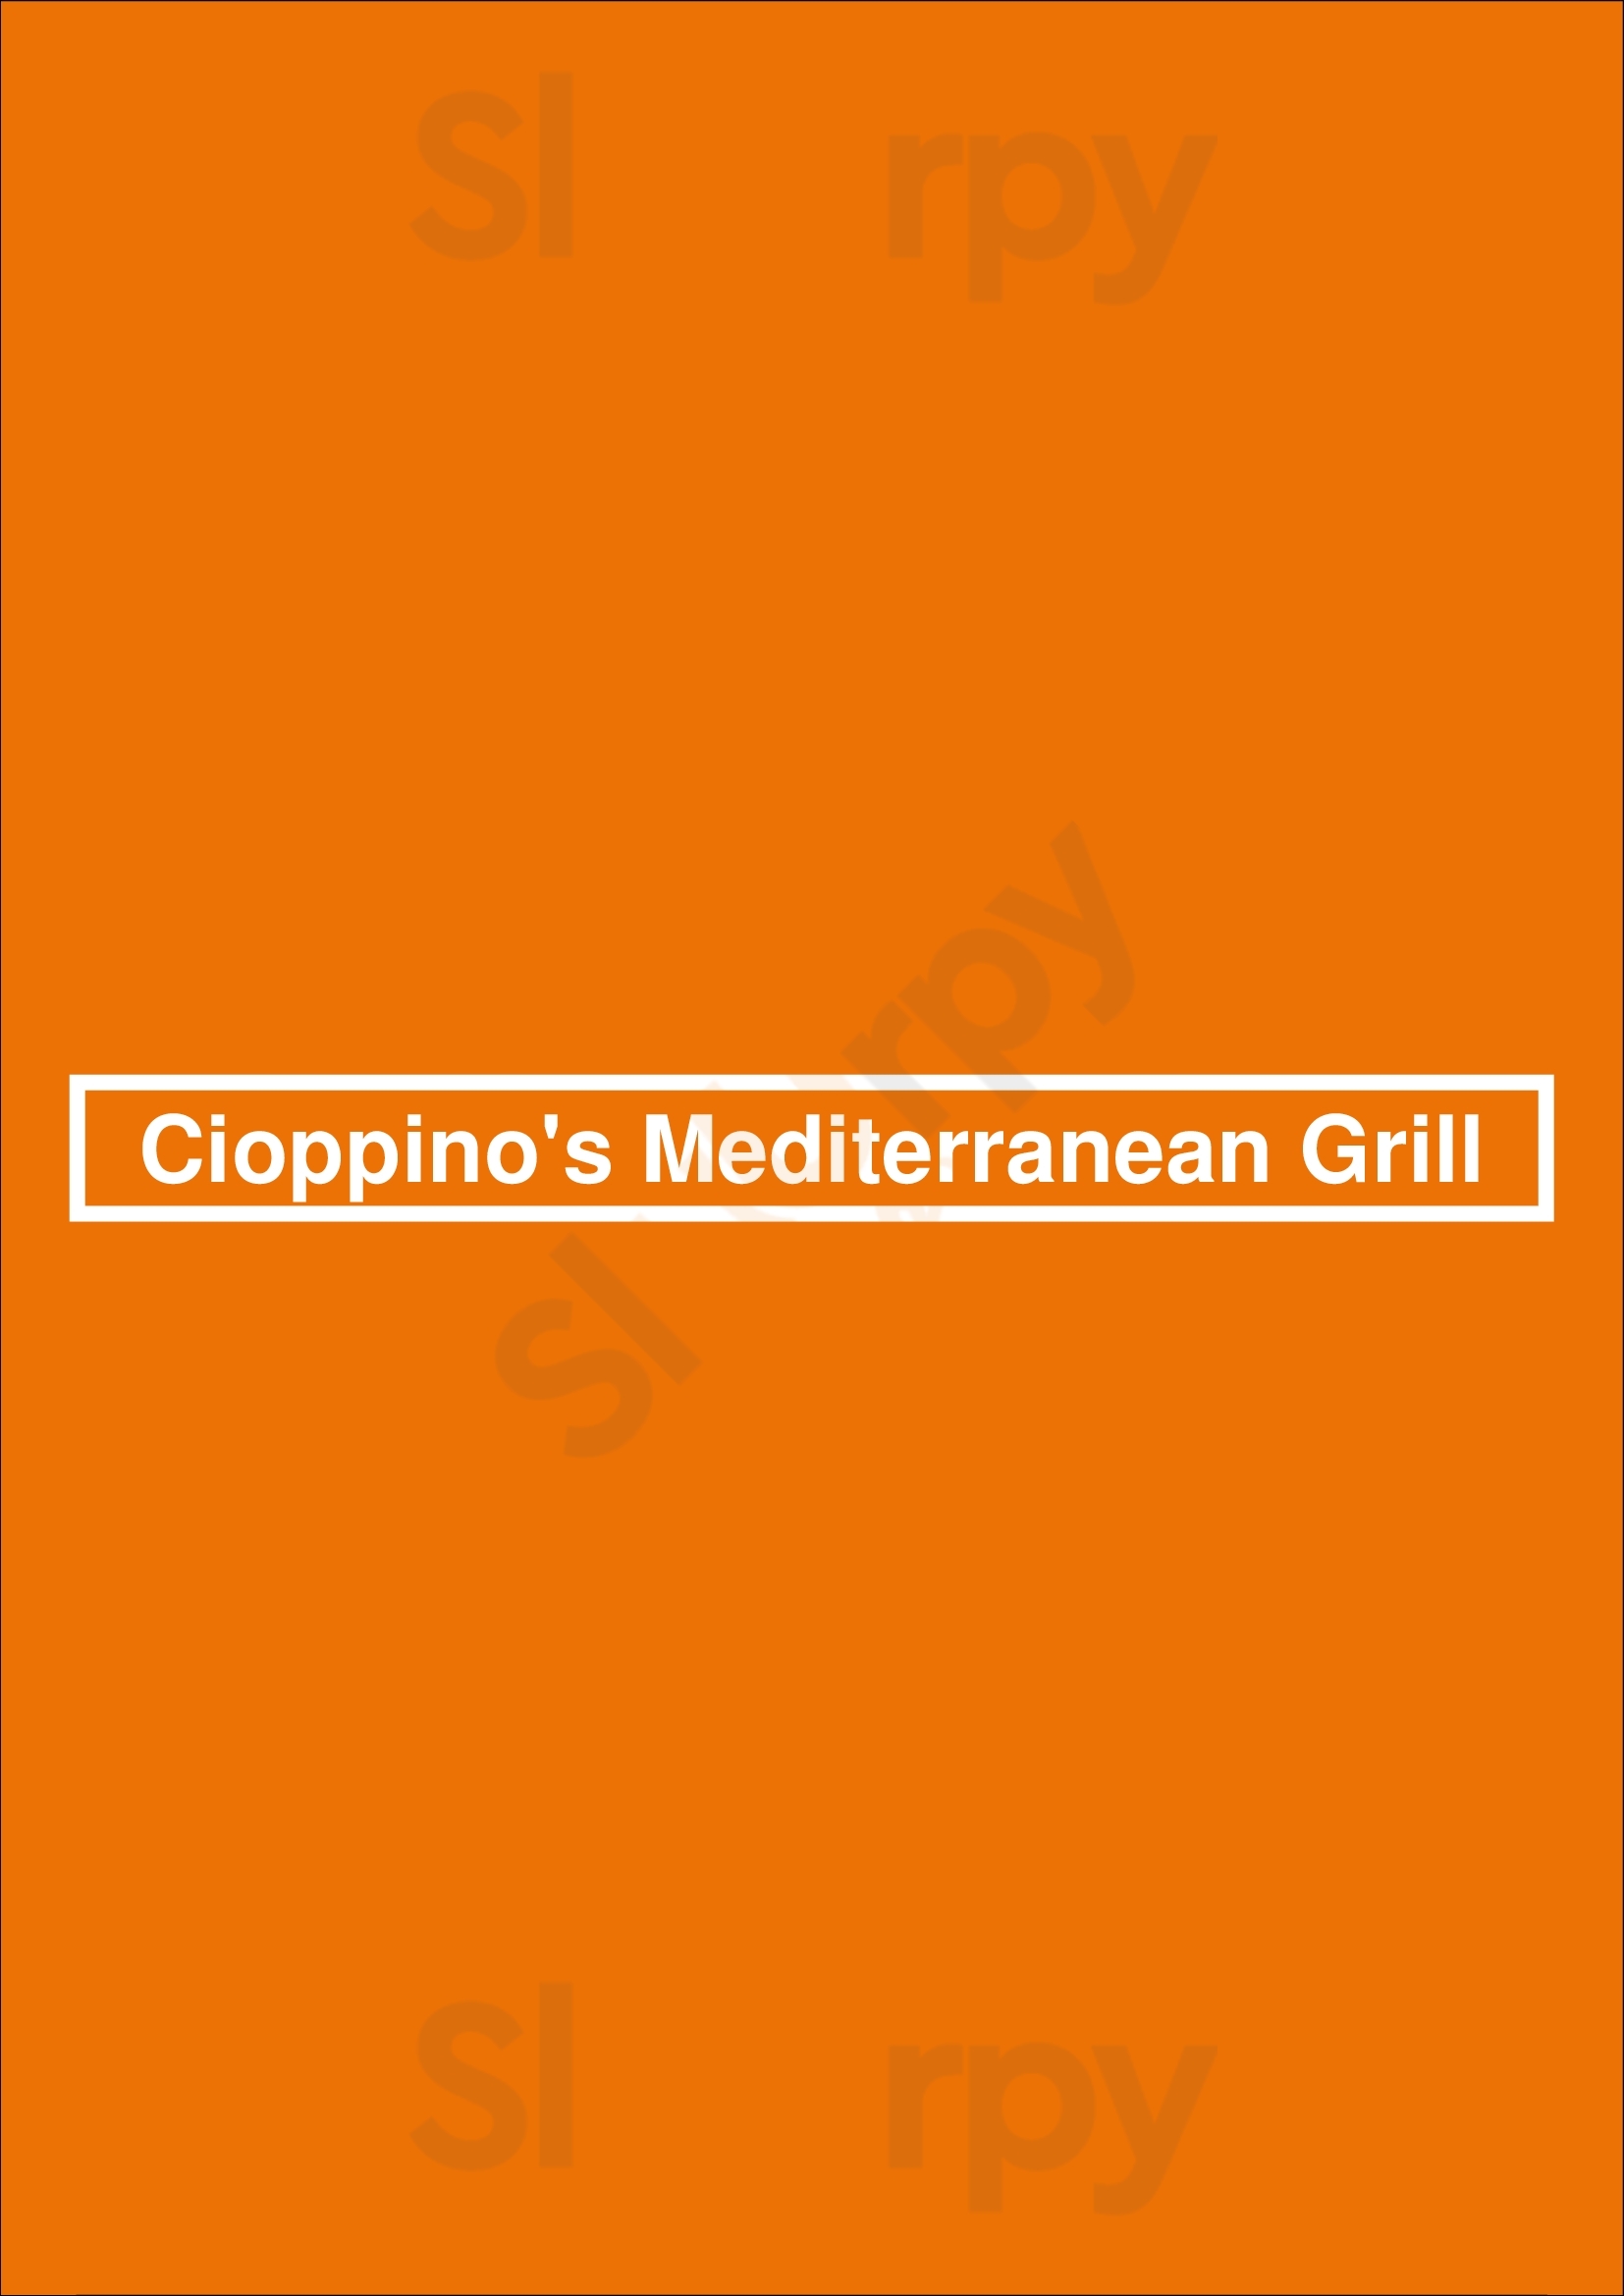 Cioppino's Mediterranean Grill Vancouver Menu - 1